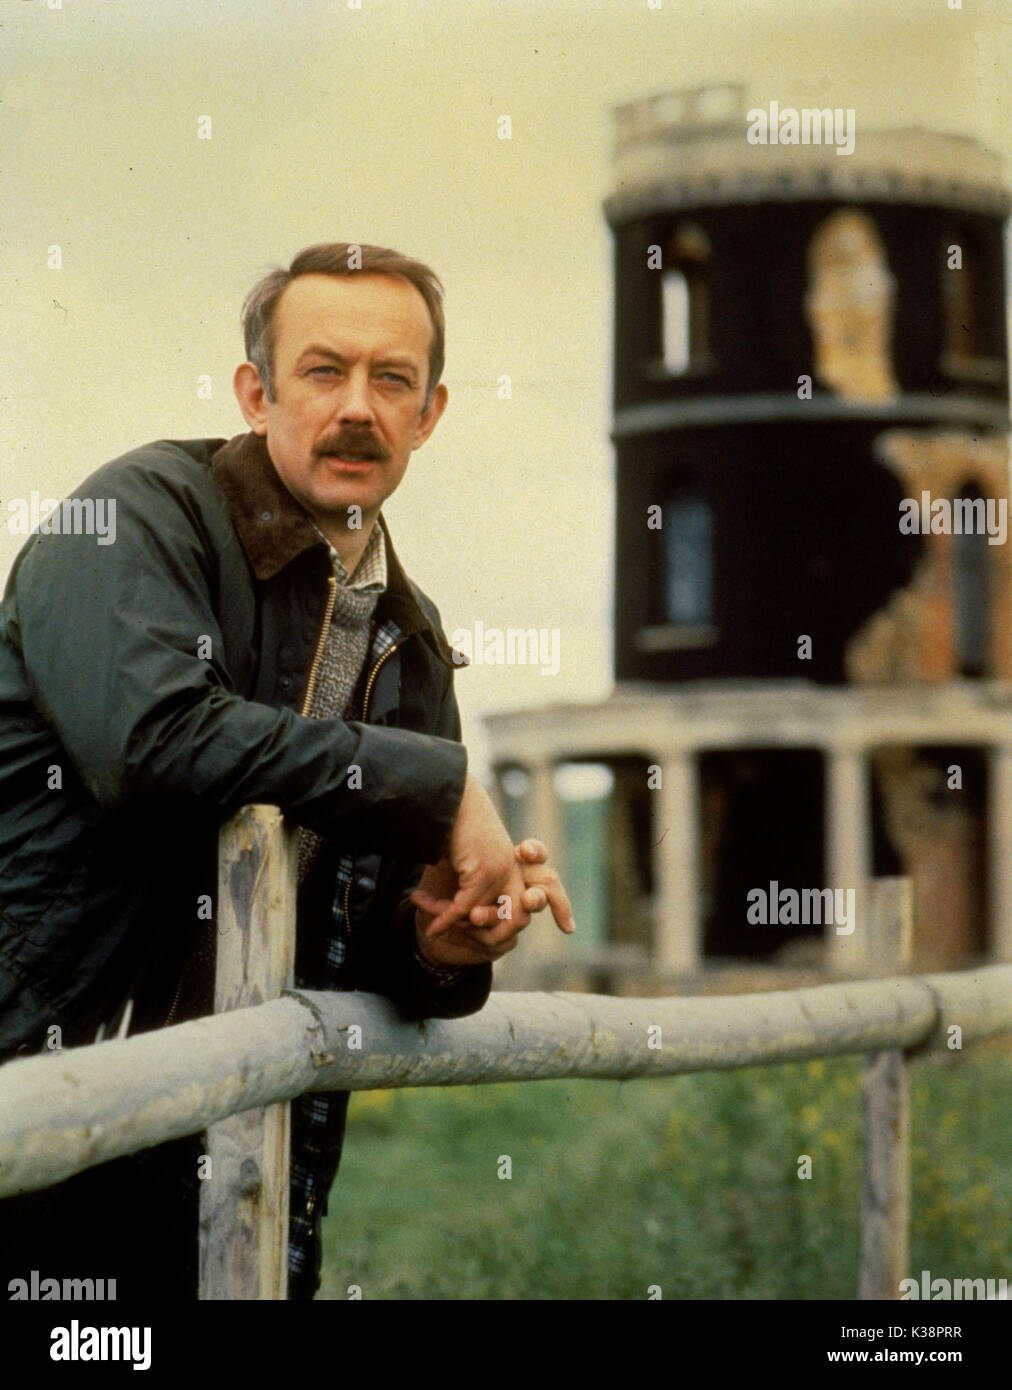 ADAM DALGLIESH MYSTERIES : THE BLACK TOWER ROY MARSDEN as Adam Dalgliesh     Date: 1985 Stock Photo